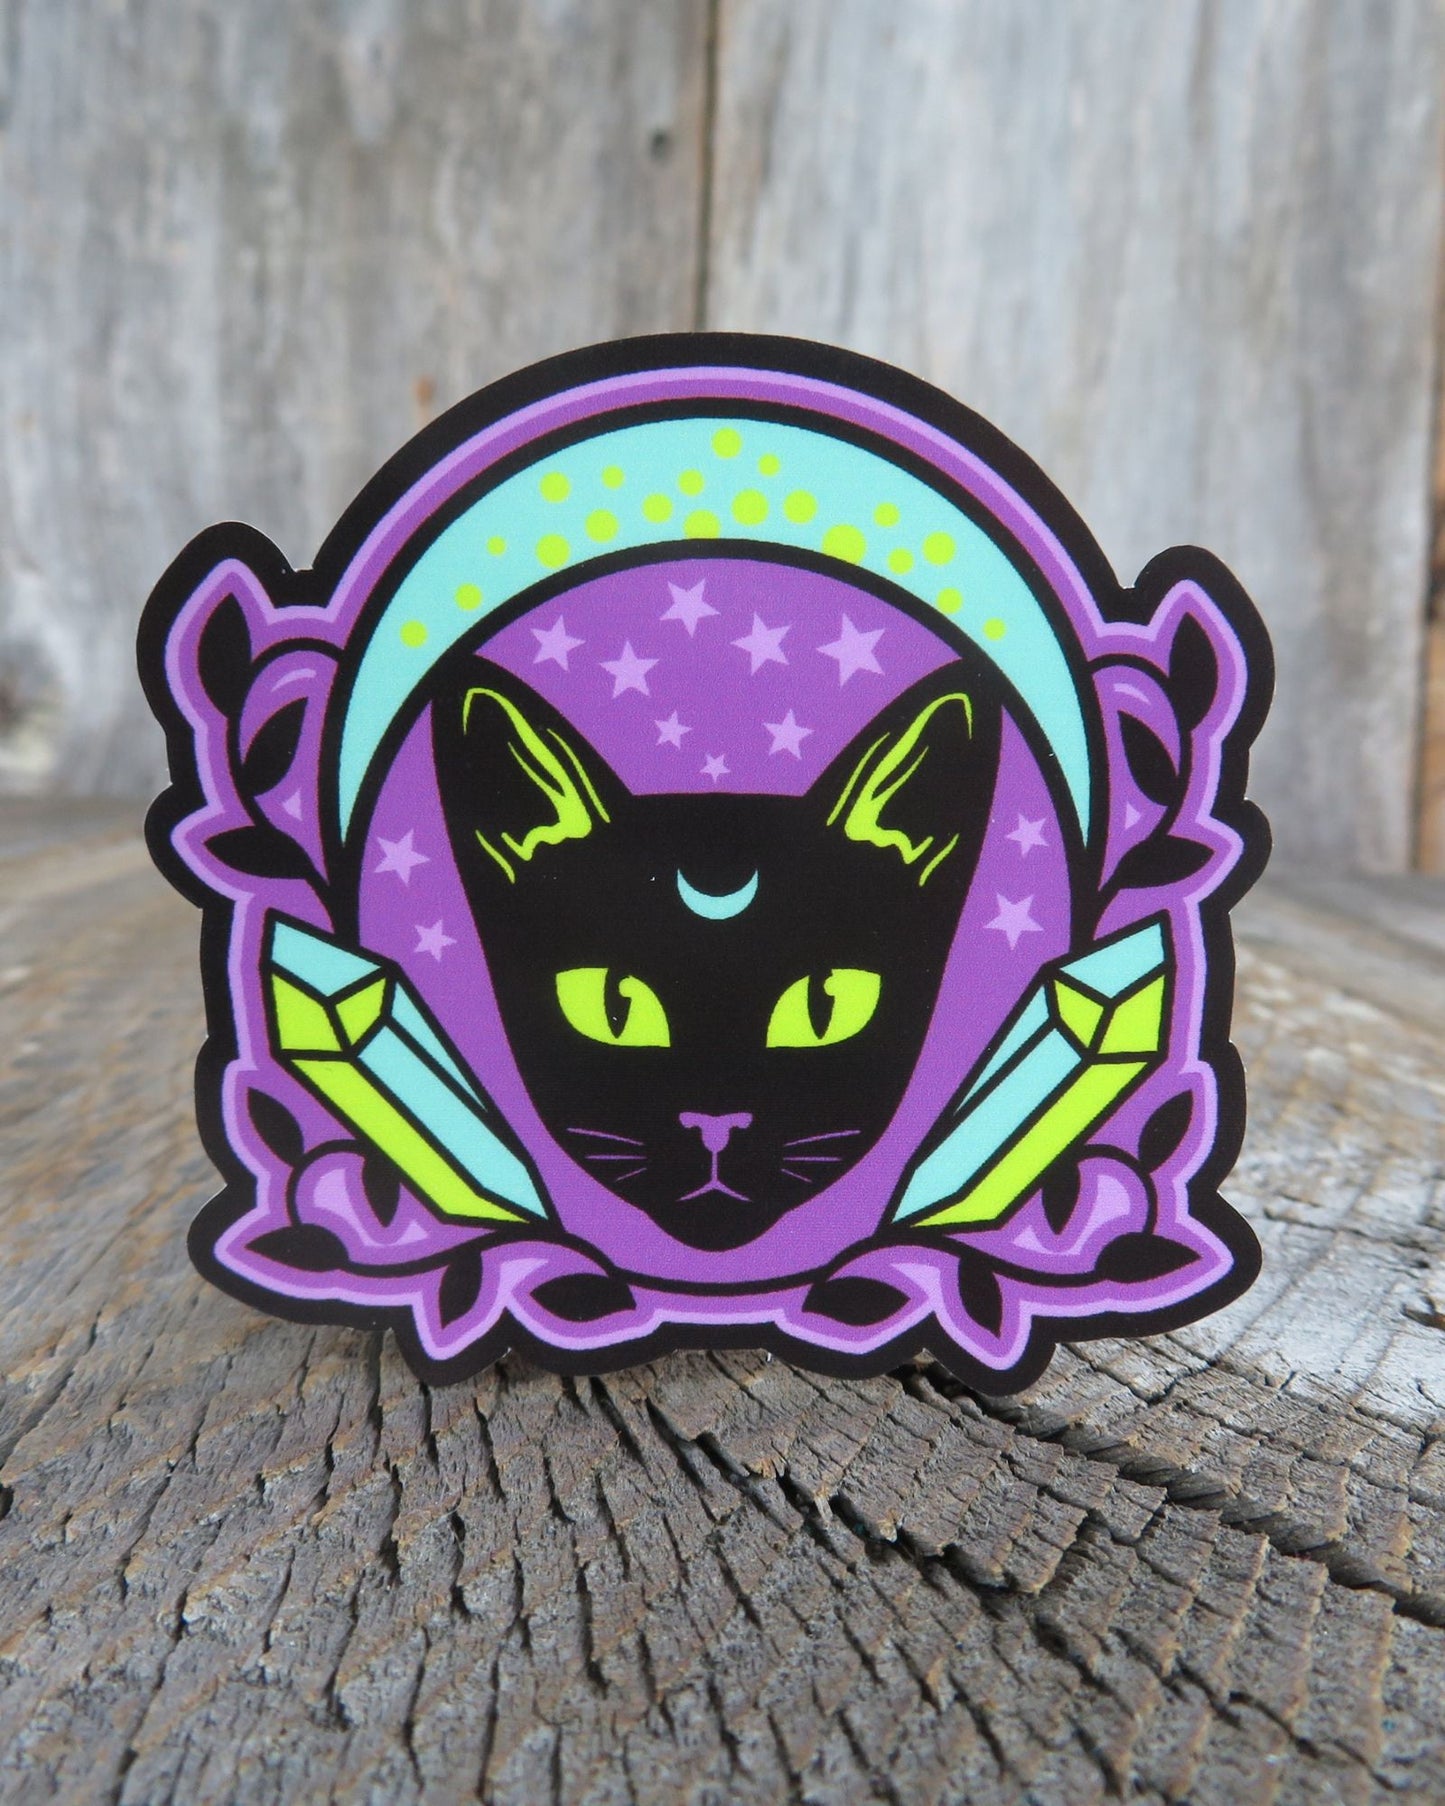 Mystic Symbols Cat Sticker Green Moon Third Eye Crystals Waterproof Magic Wicca Halloween Full Color